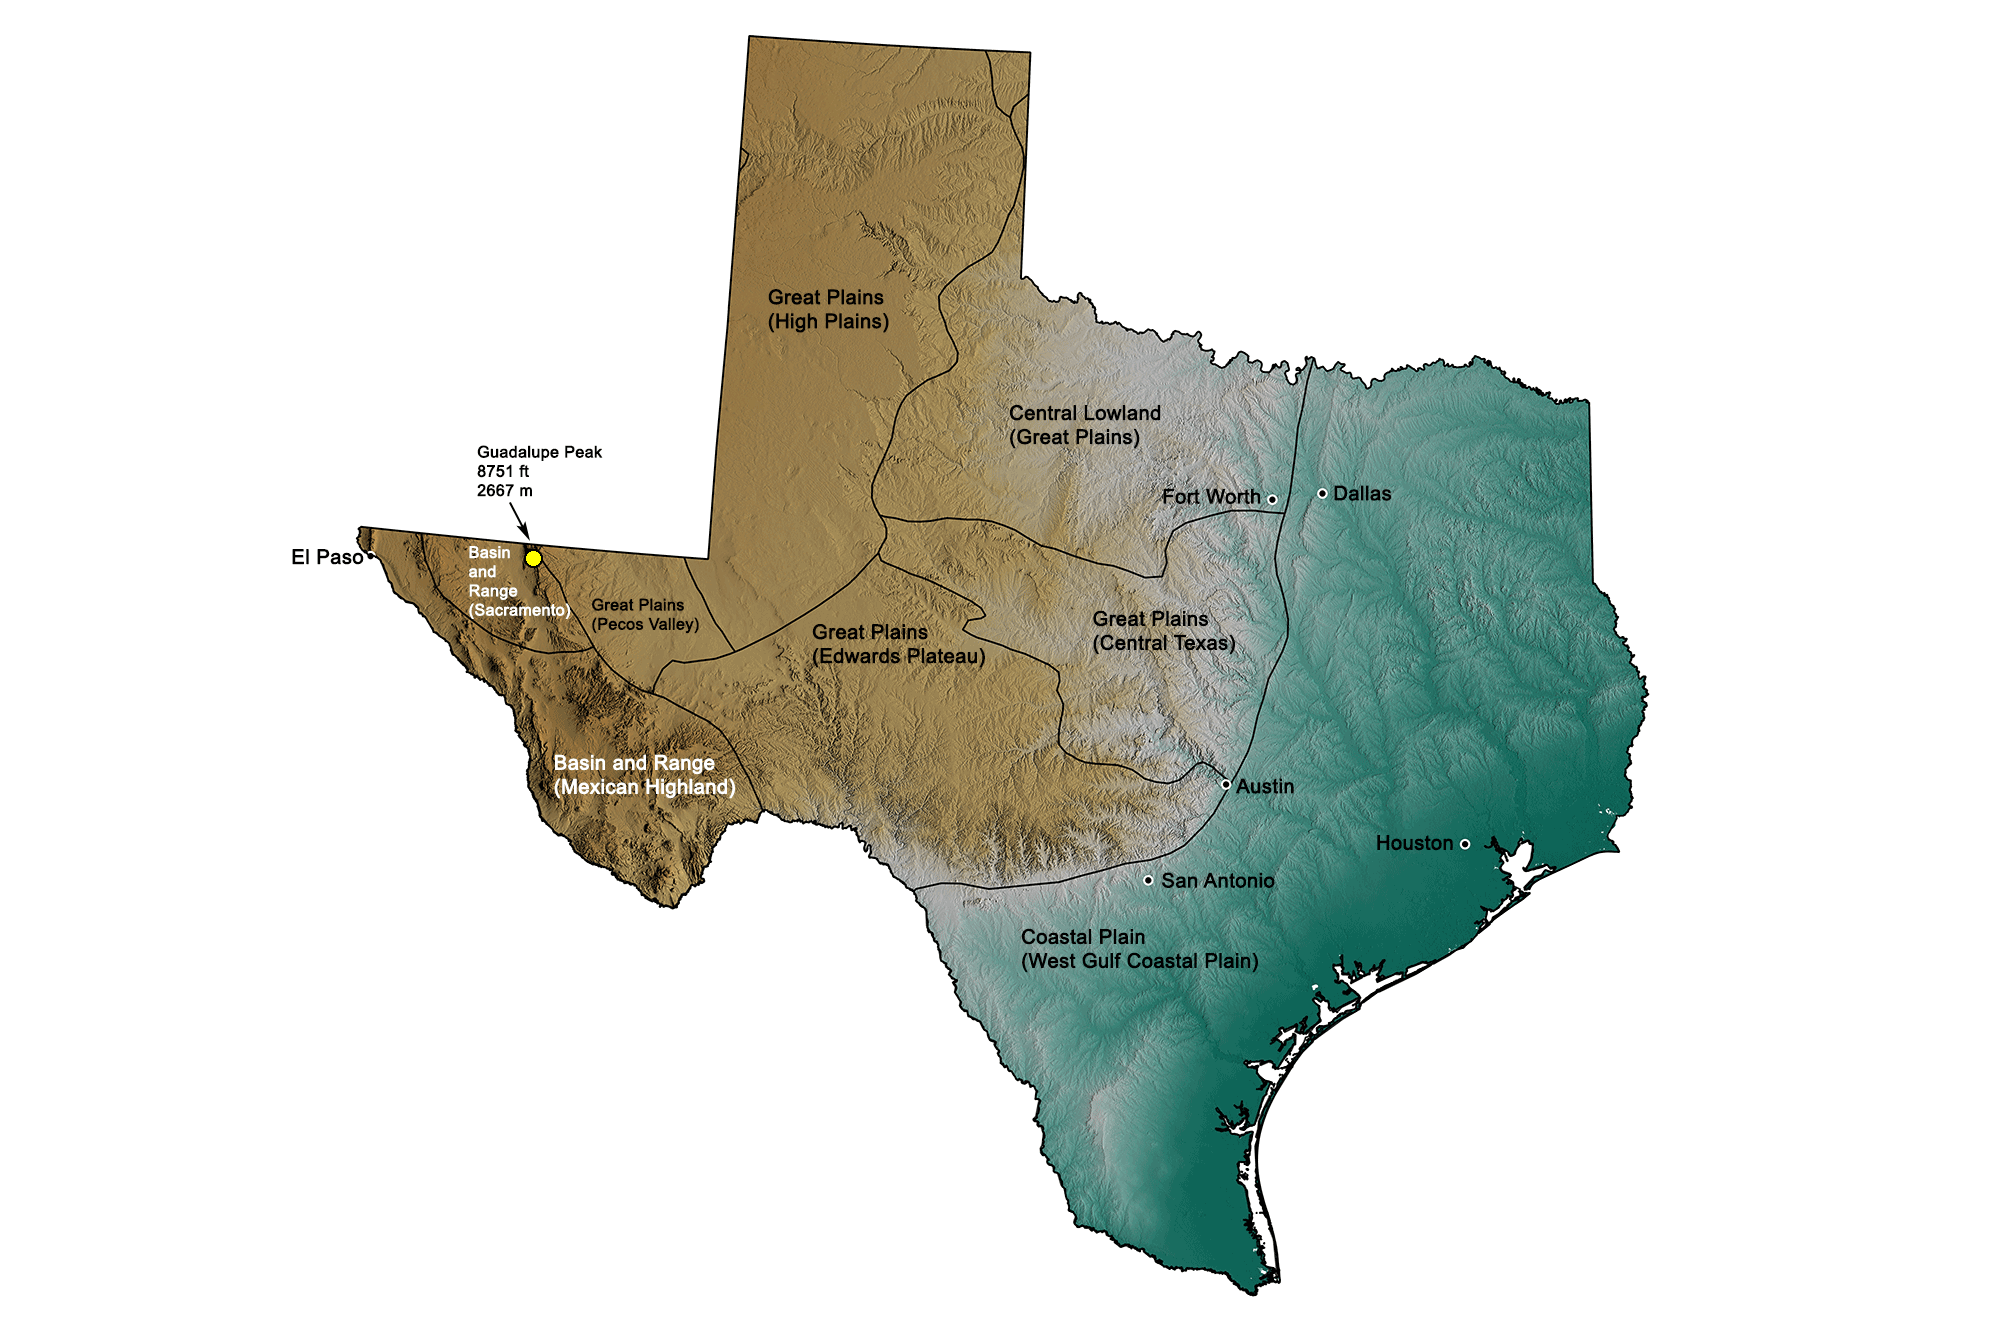 Topographic map of Texas.